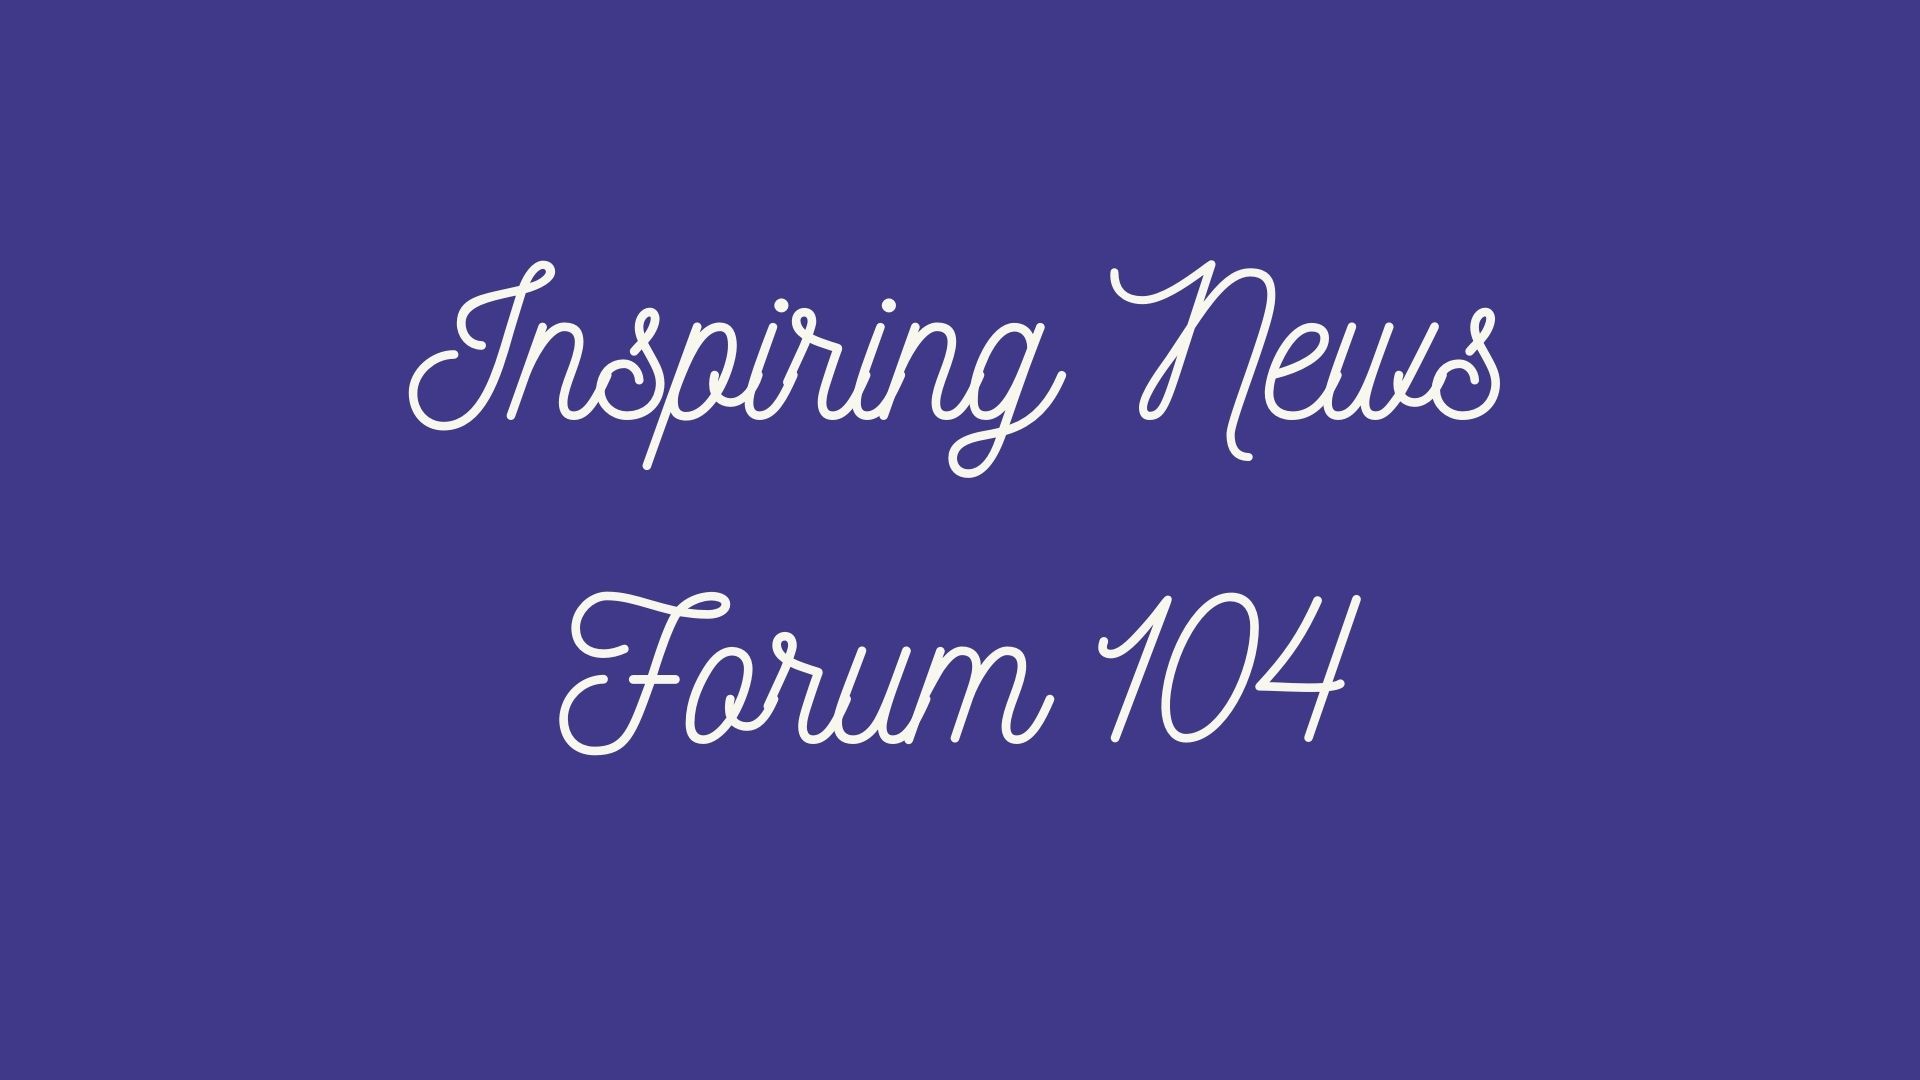 En este momento estás viendo Noticias inspiradoras: Forum 104 en París